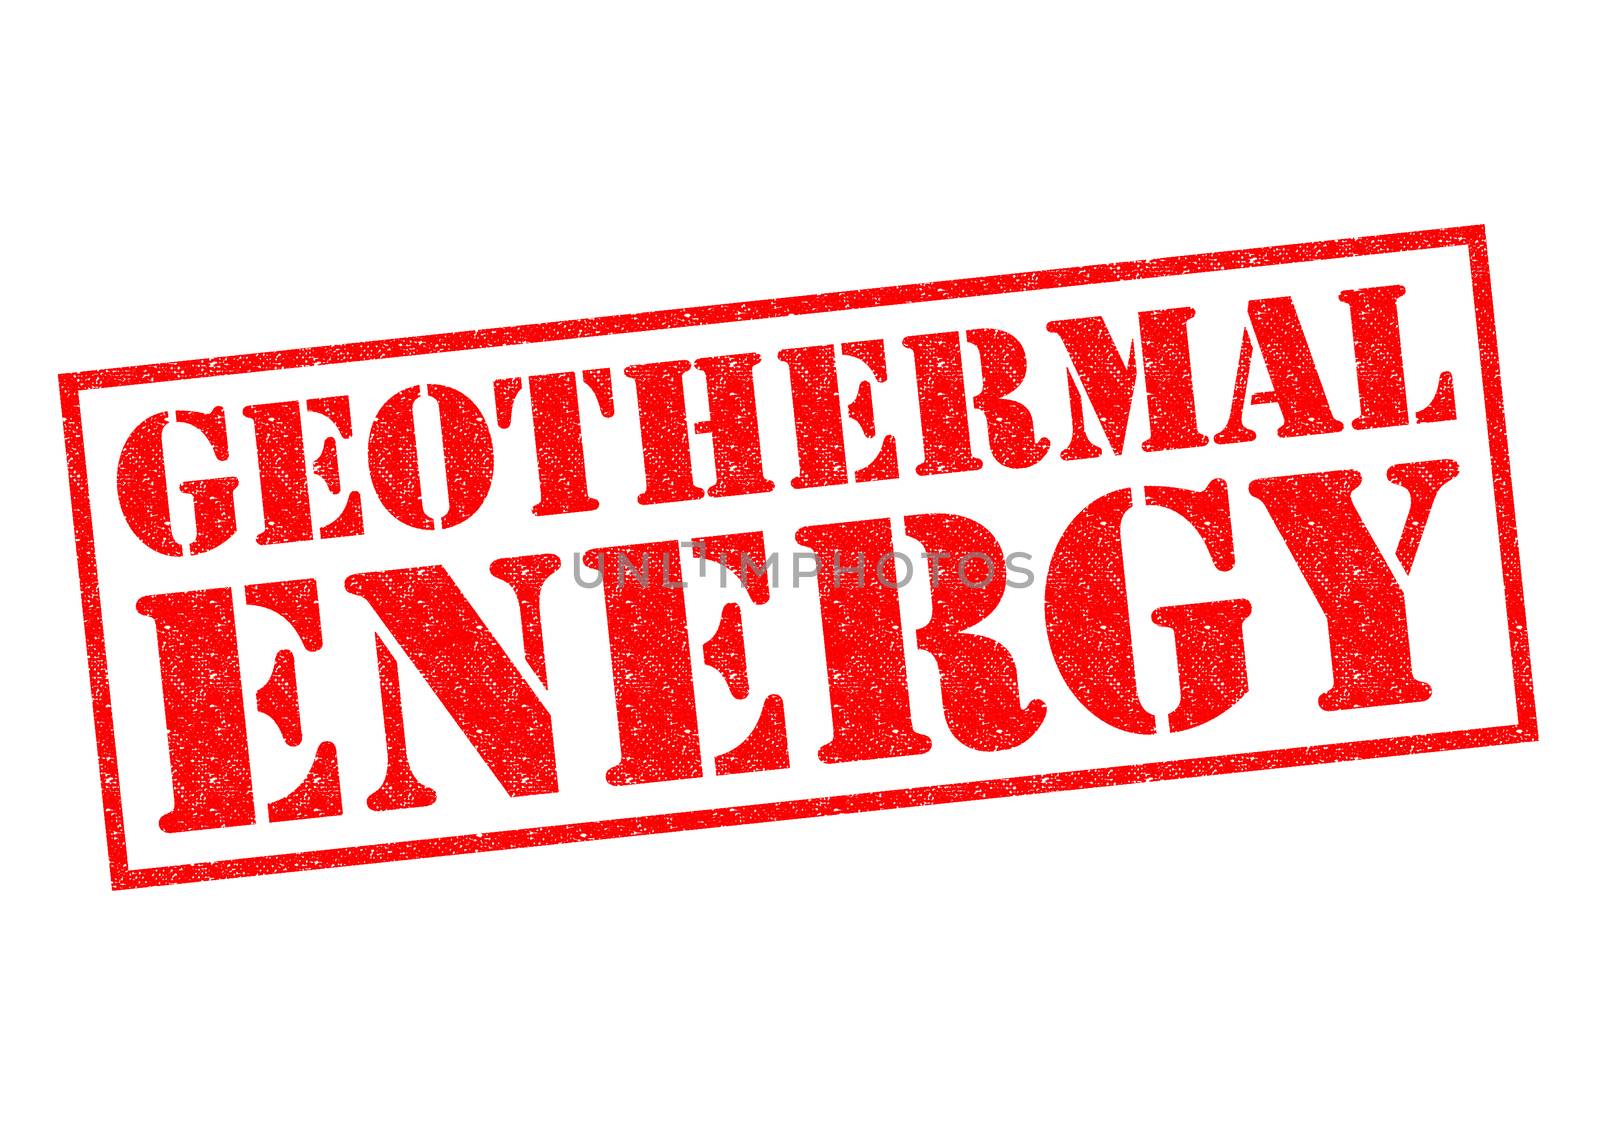 GEOTHERMAL ENERGY by chrisdorney